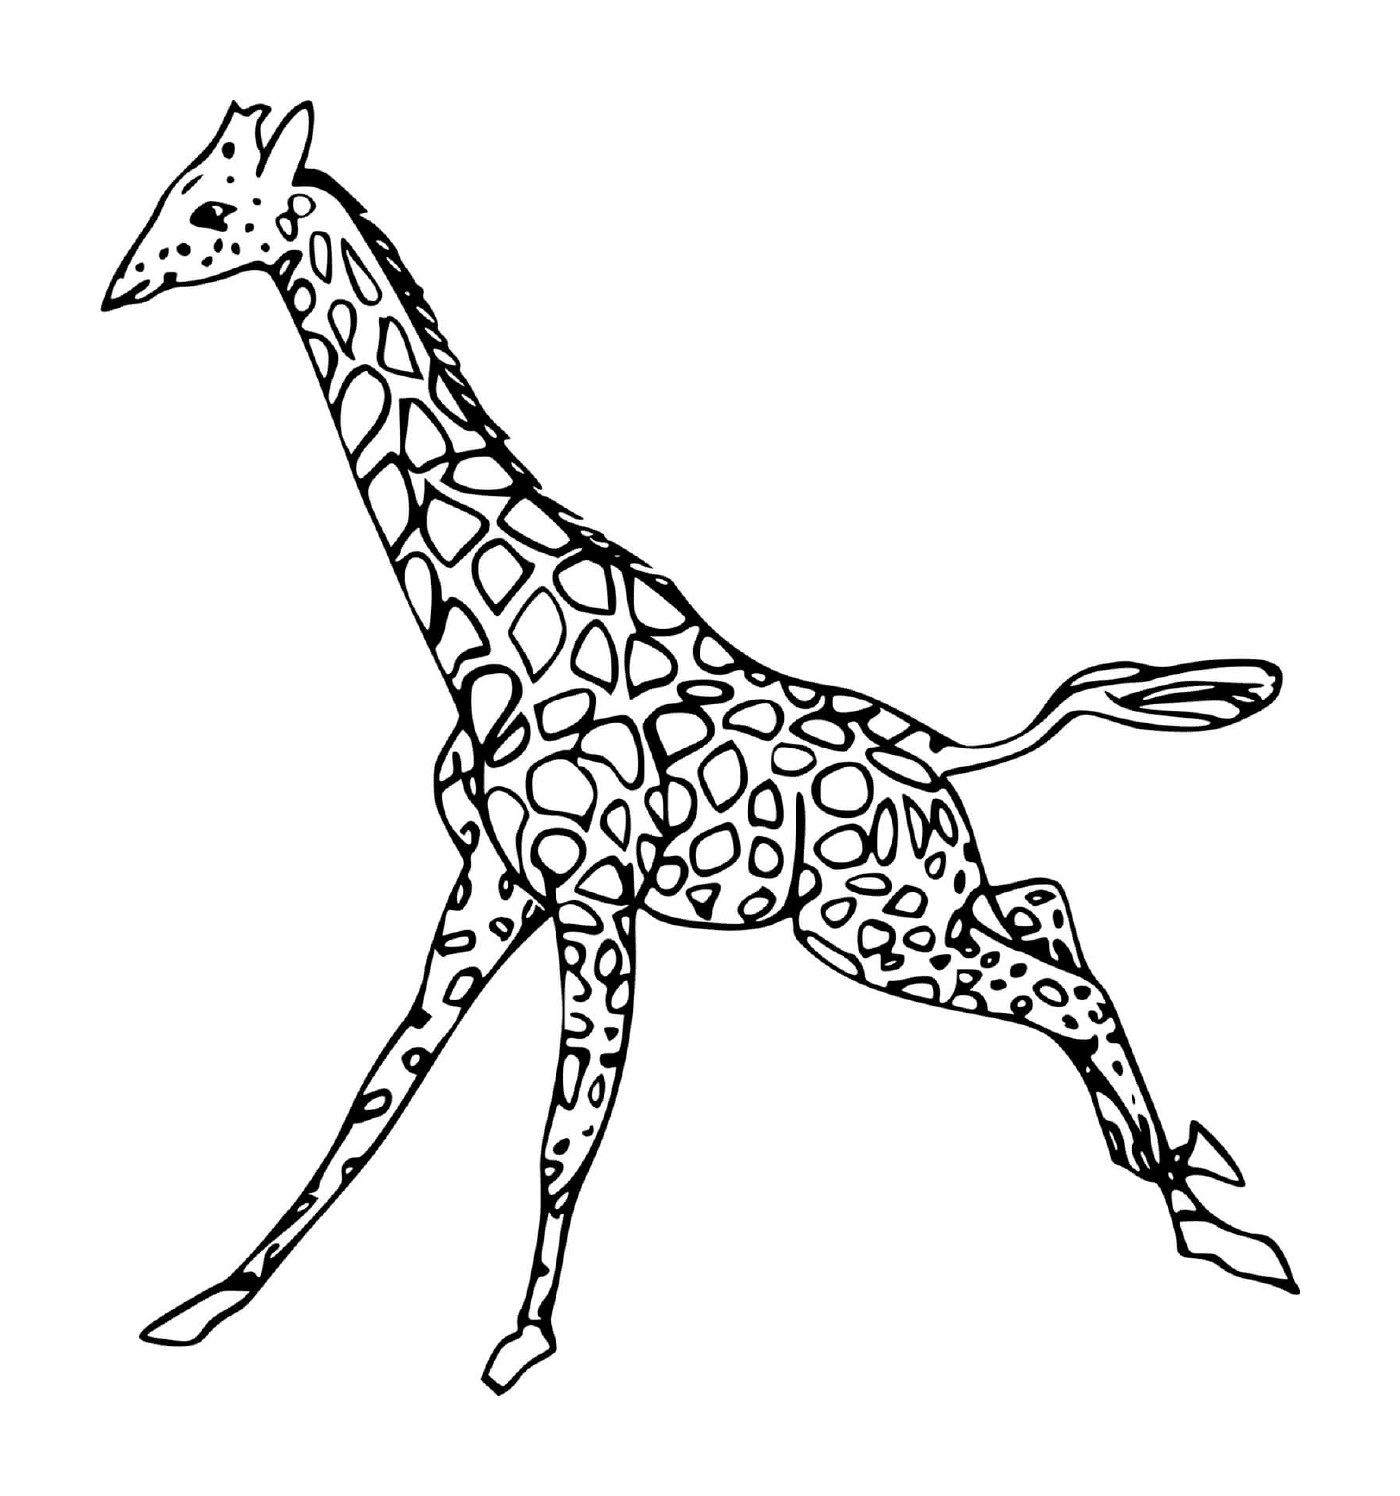  Girafe correndo 